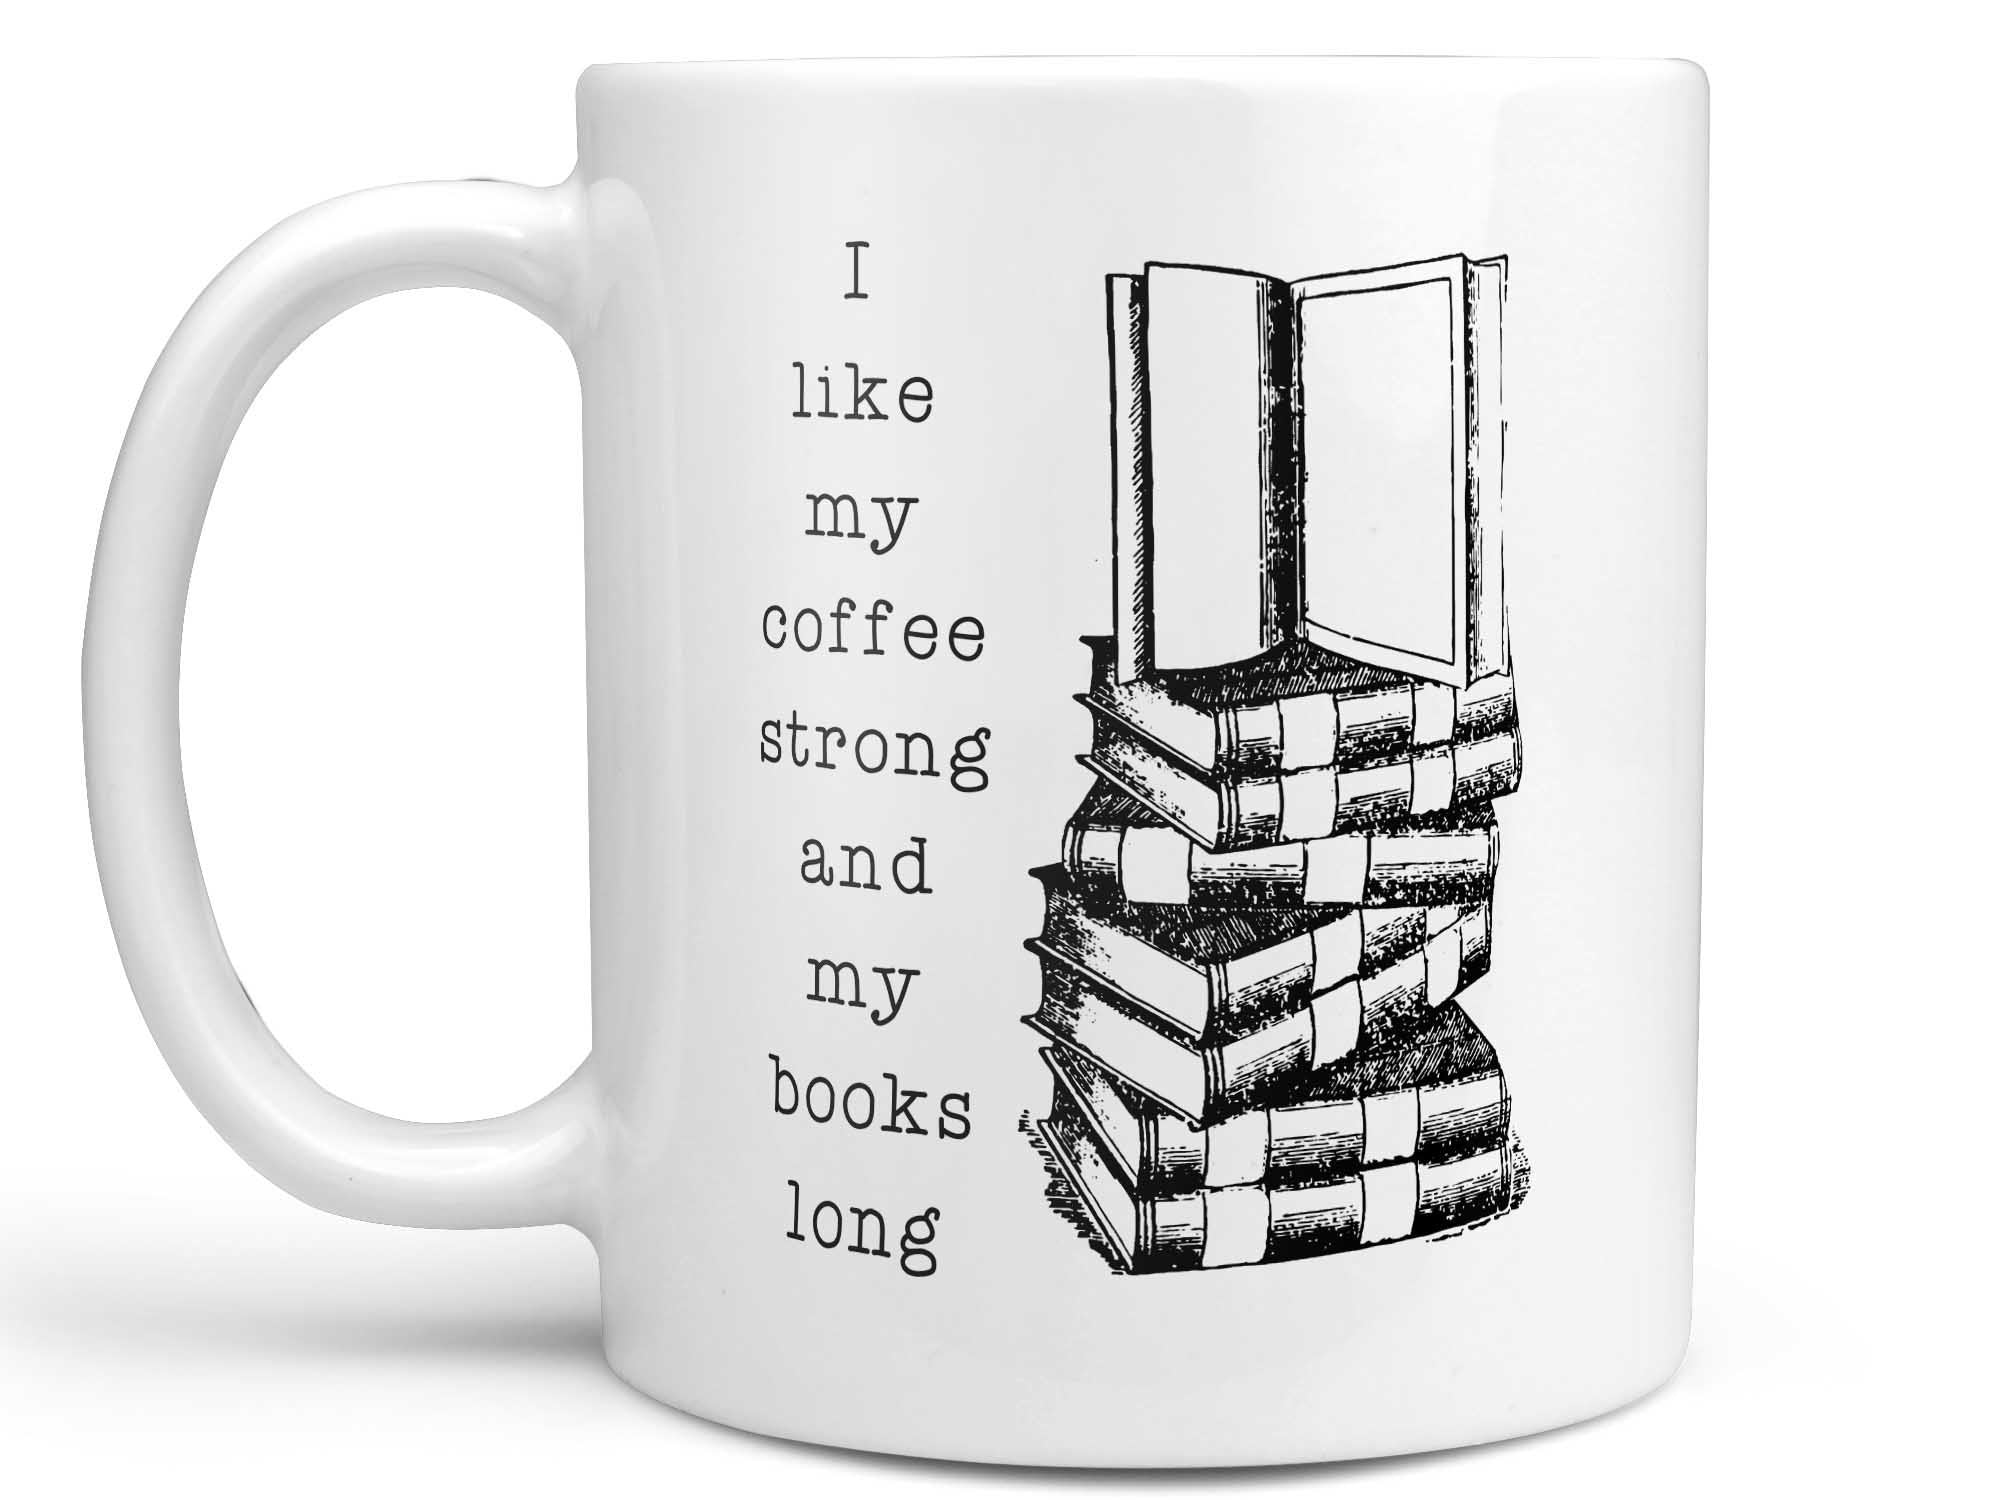 Coffee Strong and Books Long Coffee Mug,Coffee Mugs Never Lie,Coffee Mug